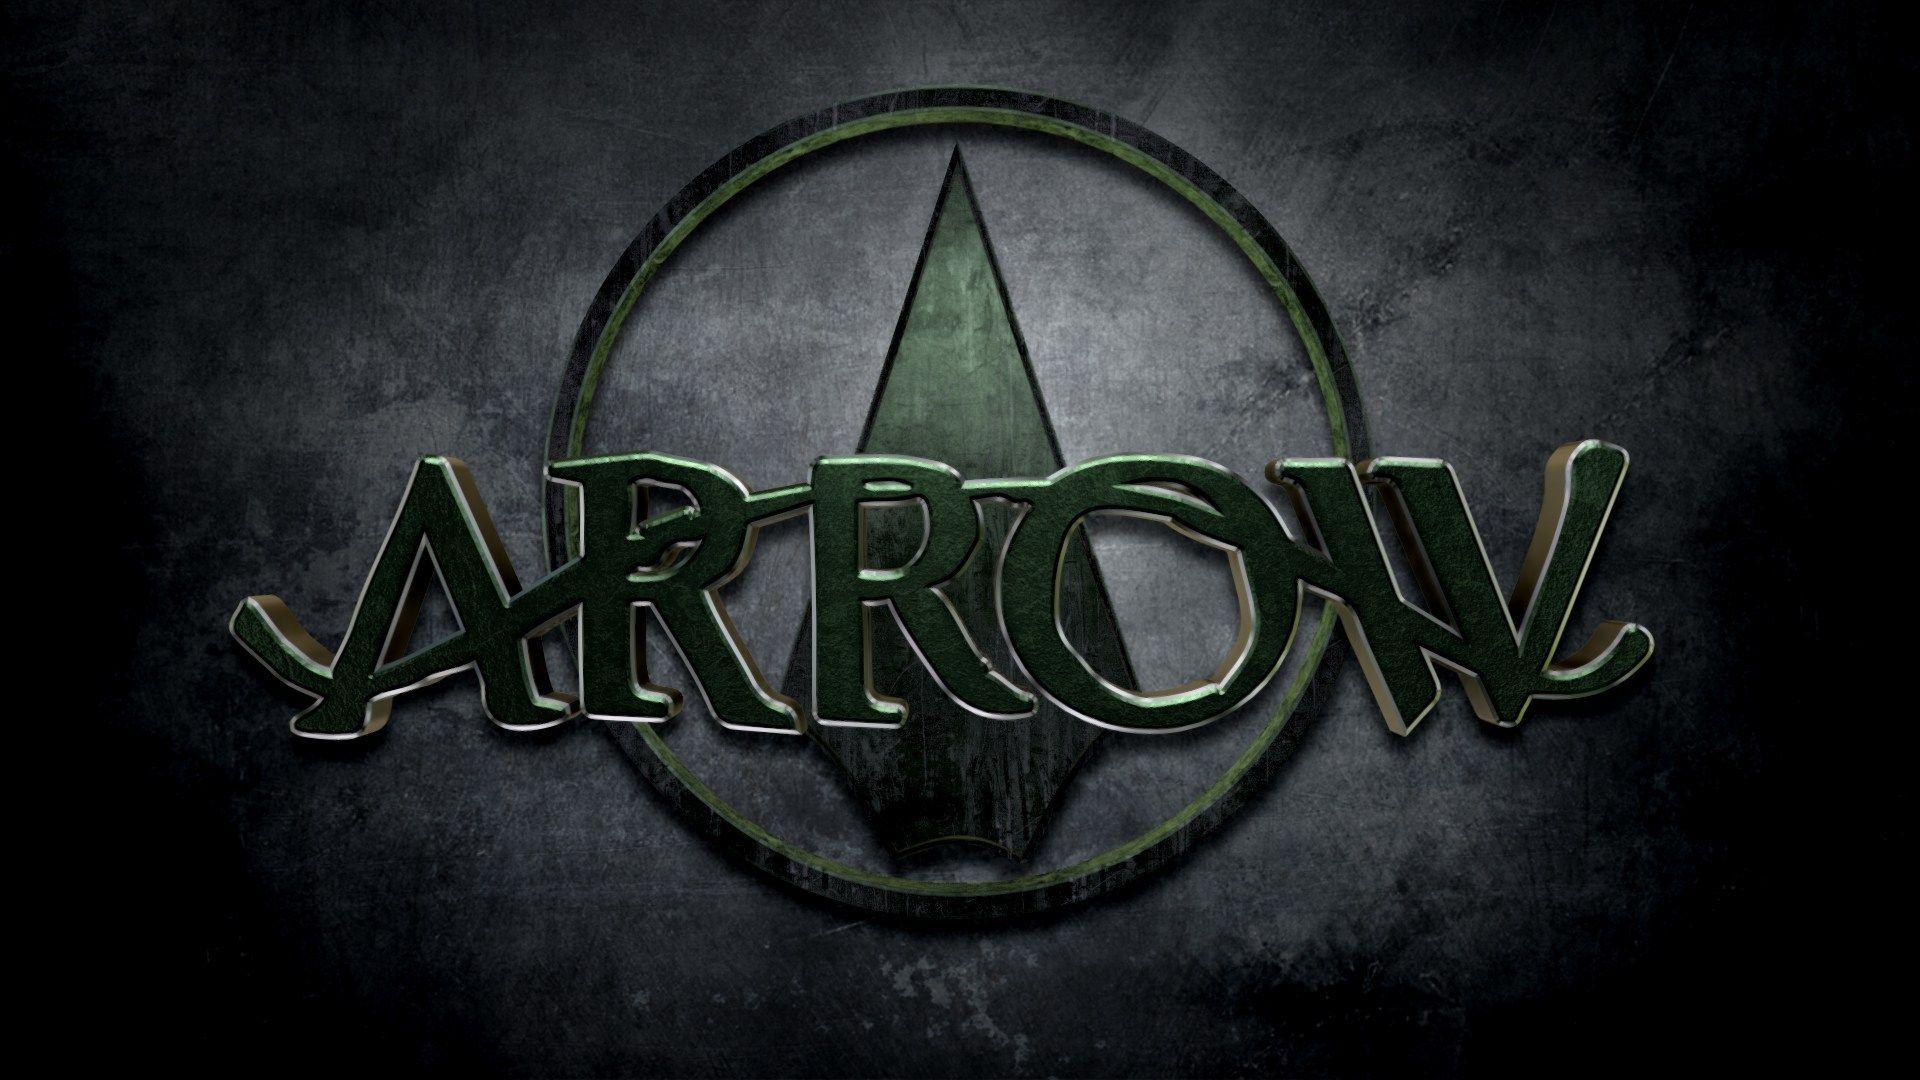 Arrow Show Logo - arrow logo wallpapers hd pictures images | ololoshenka | Pinterest ...